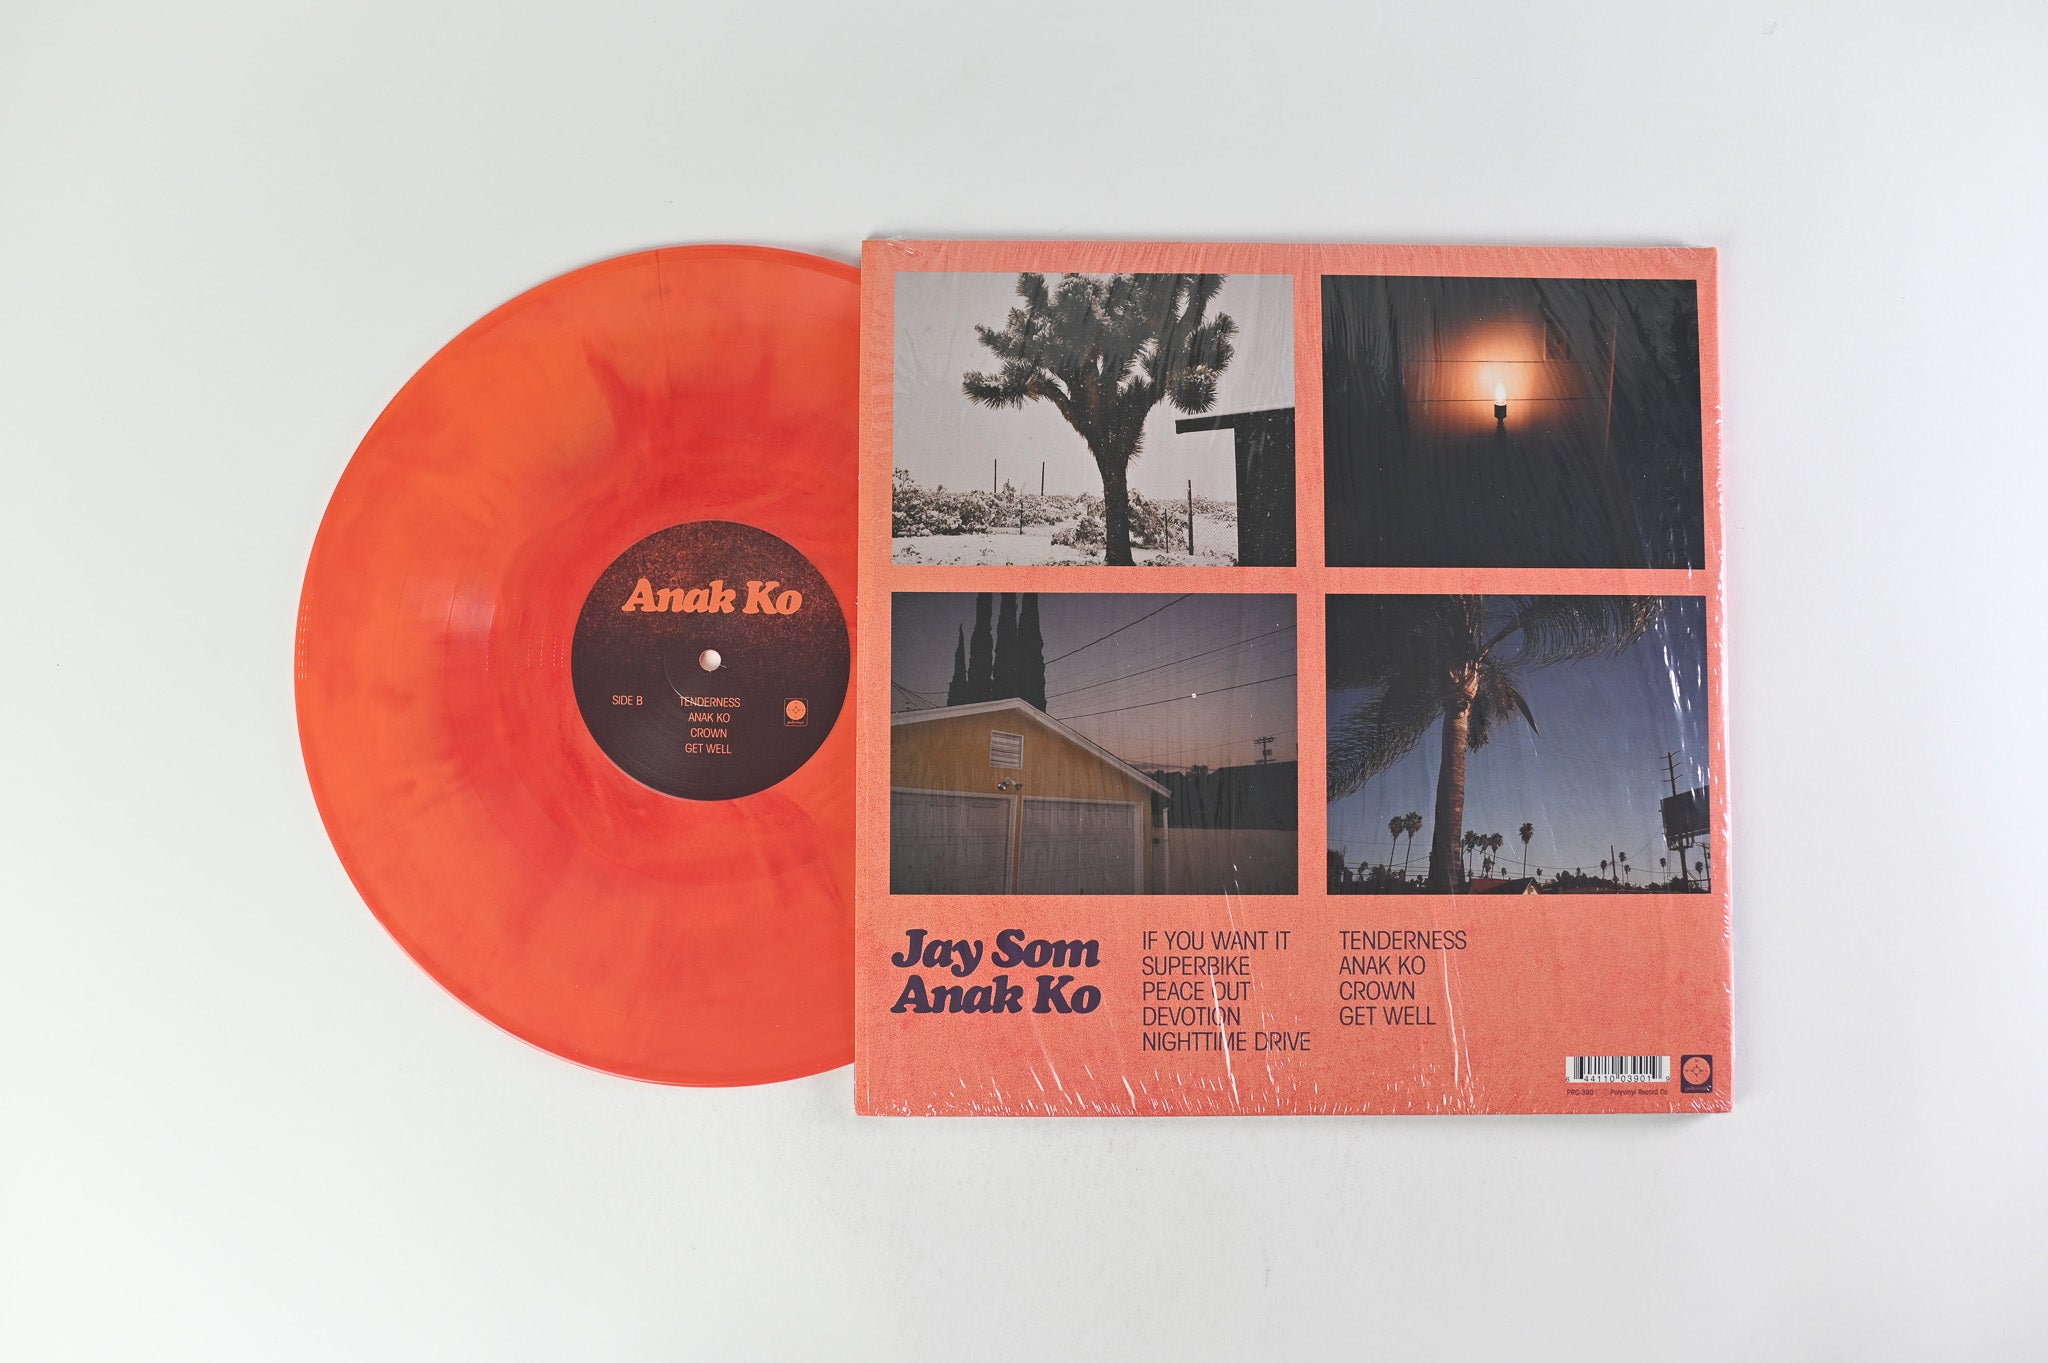 Jay Som - Anak Ko on Polyvinyl Record Company - Red/Orange Colored Vinyl